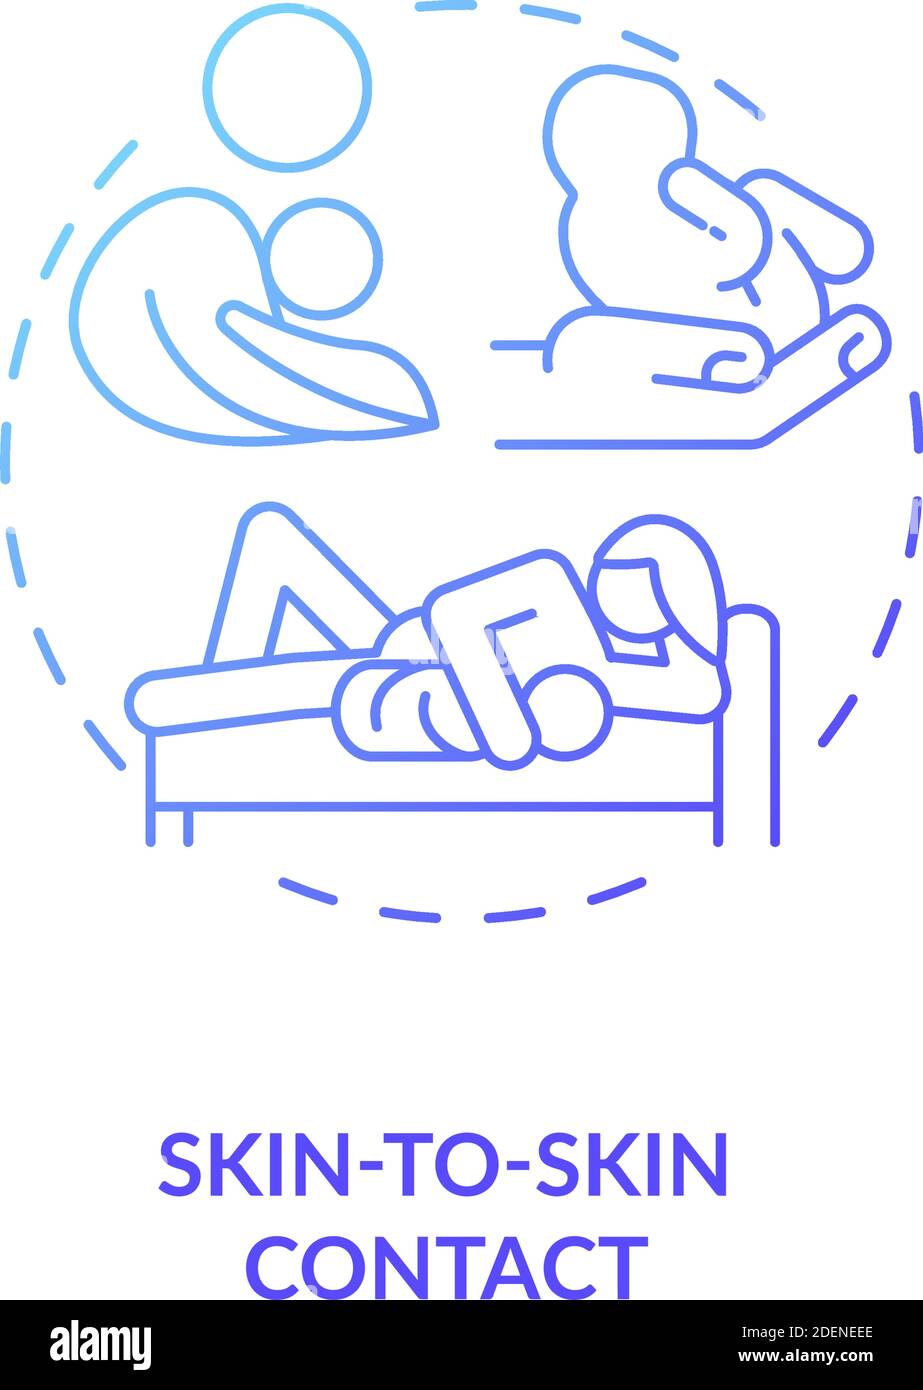 Skin to skin contact concept icon Stock Vector